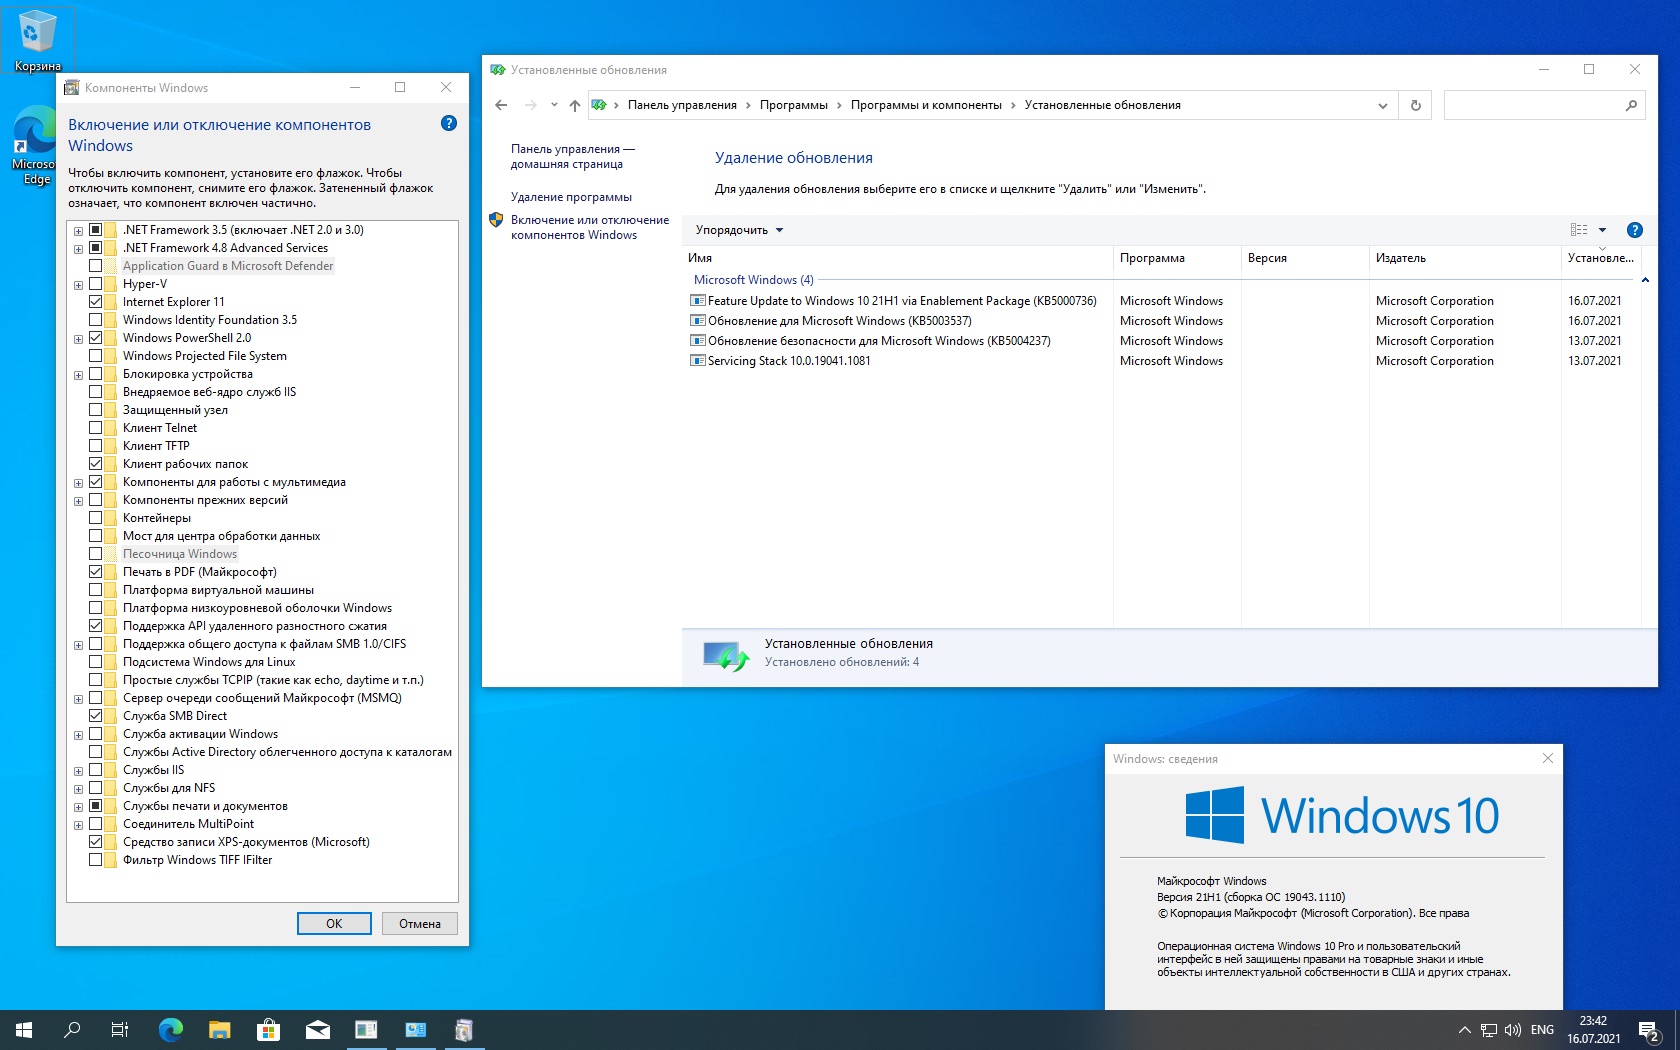 Sergey strelec ru. Windows Pro 21h1. Windows 10 Pro 21h1. Windows 10 домашняя для одного языка 21h1. Windows 10 build 19043.